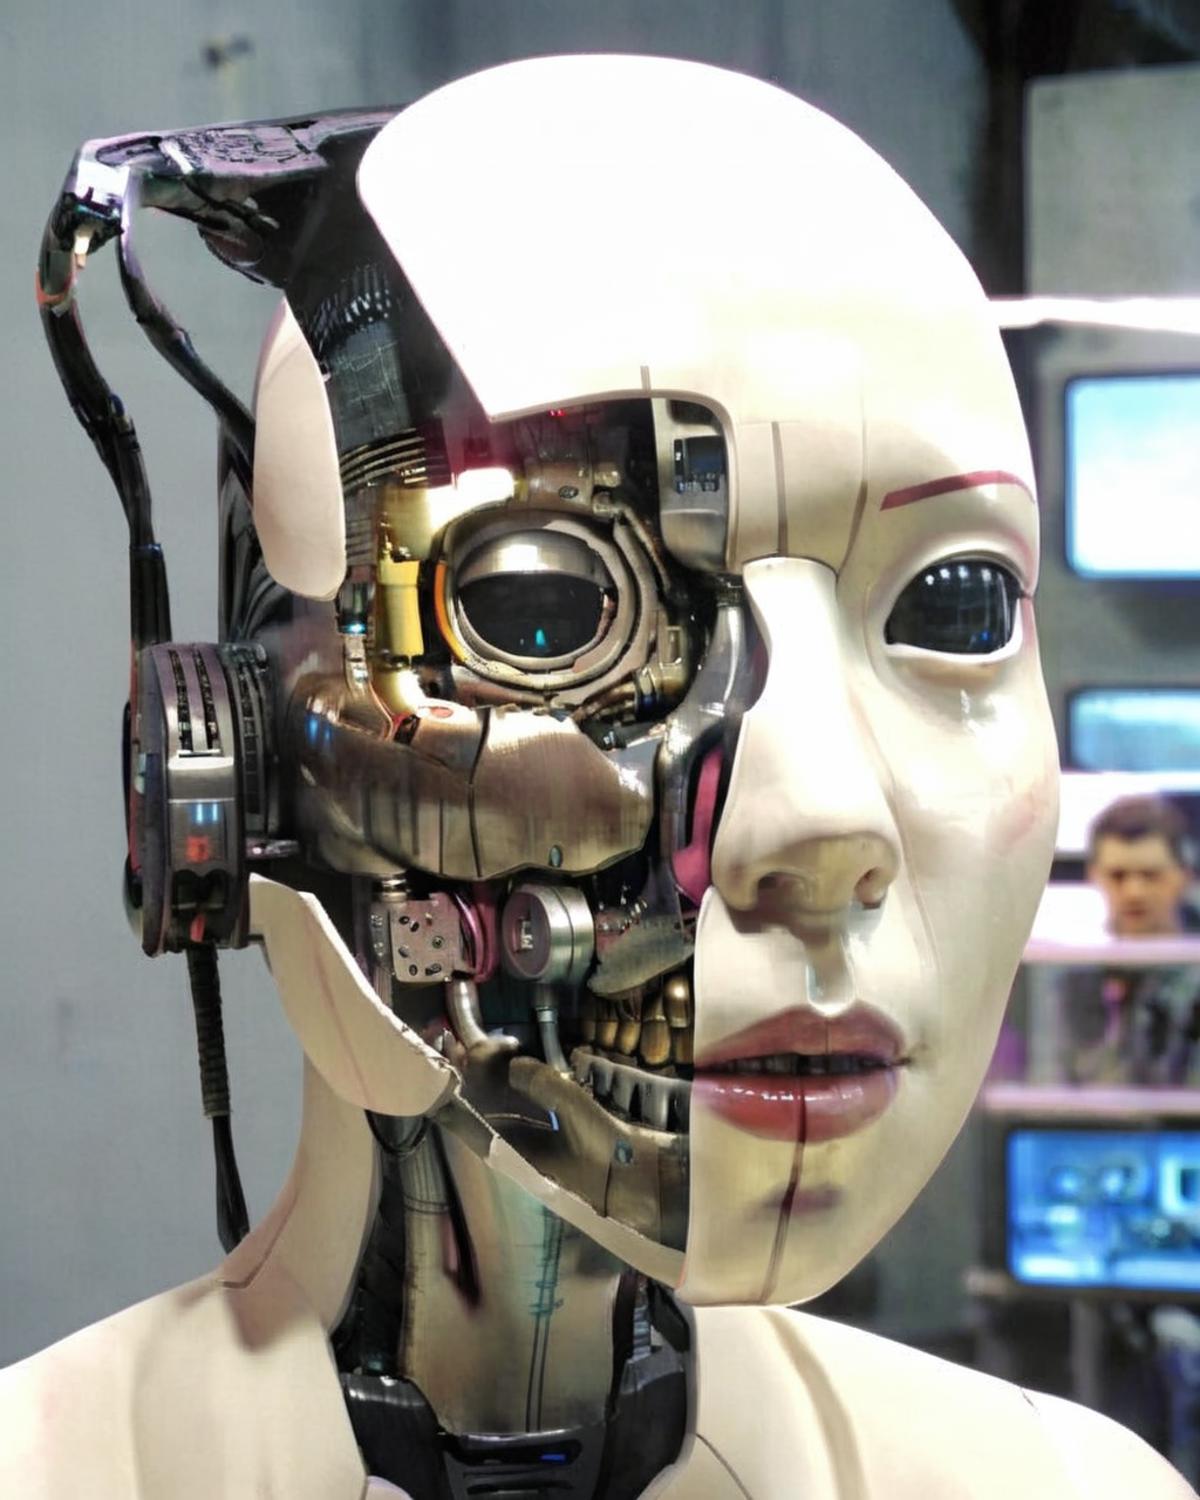 Face Robotics image by Ciro_Negrogni